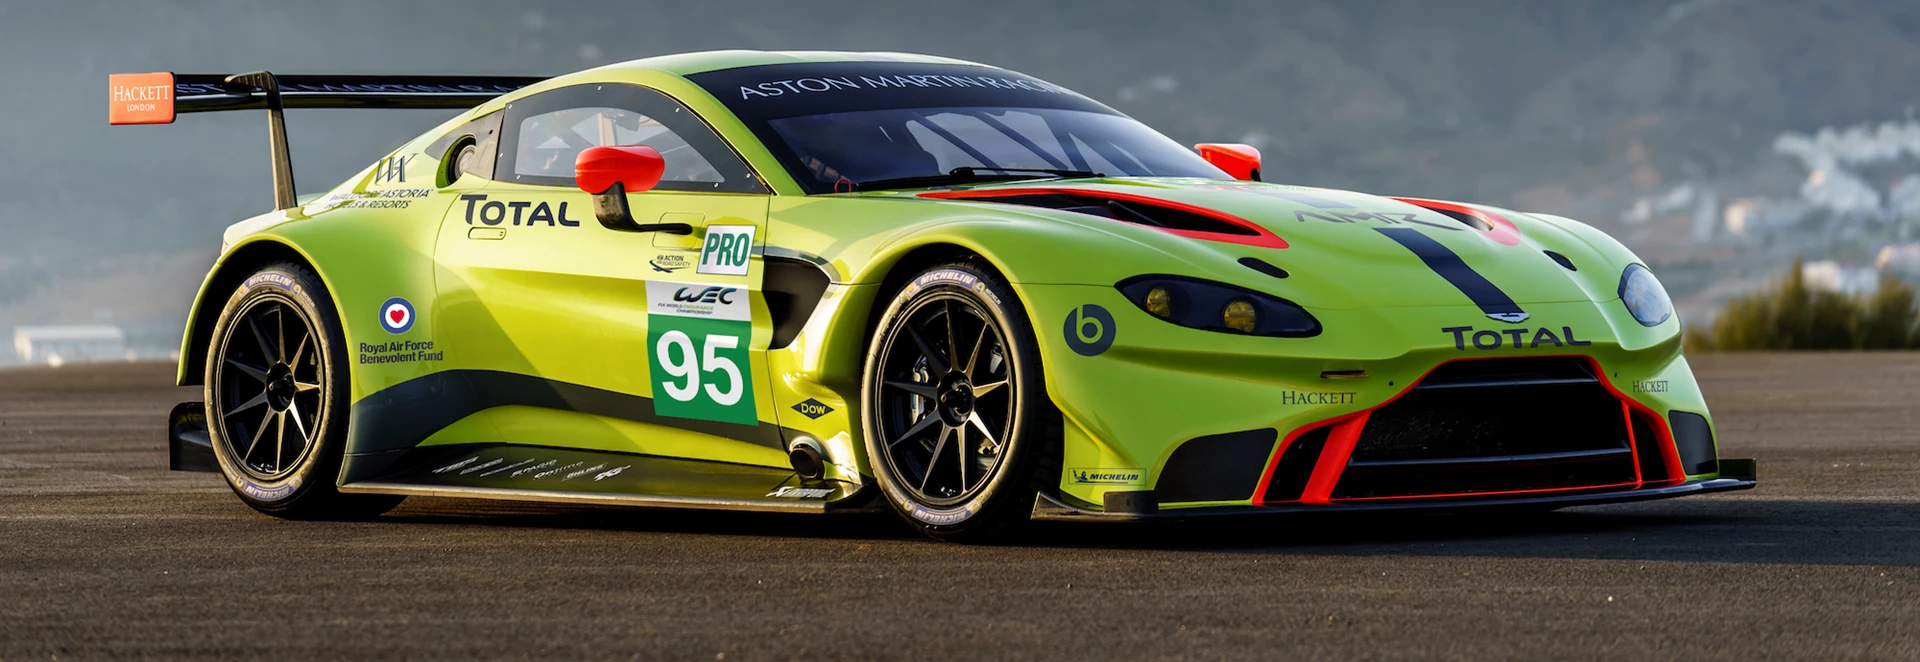 2018 Aston Martin Vantage GTE race car revealed 